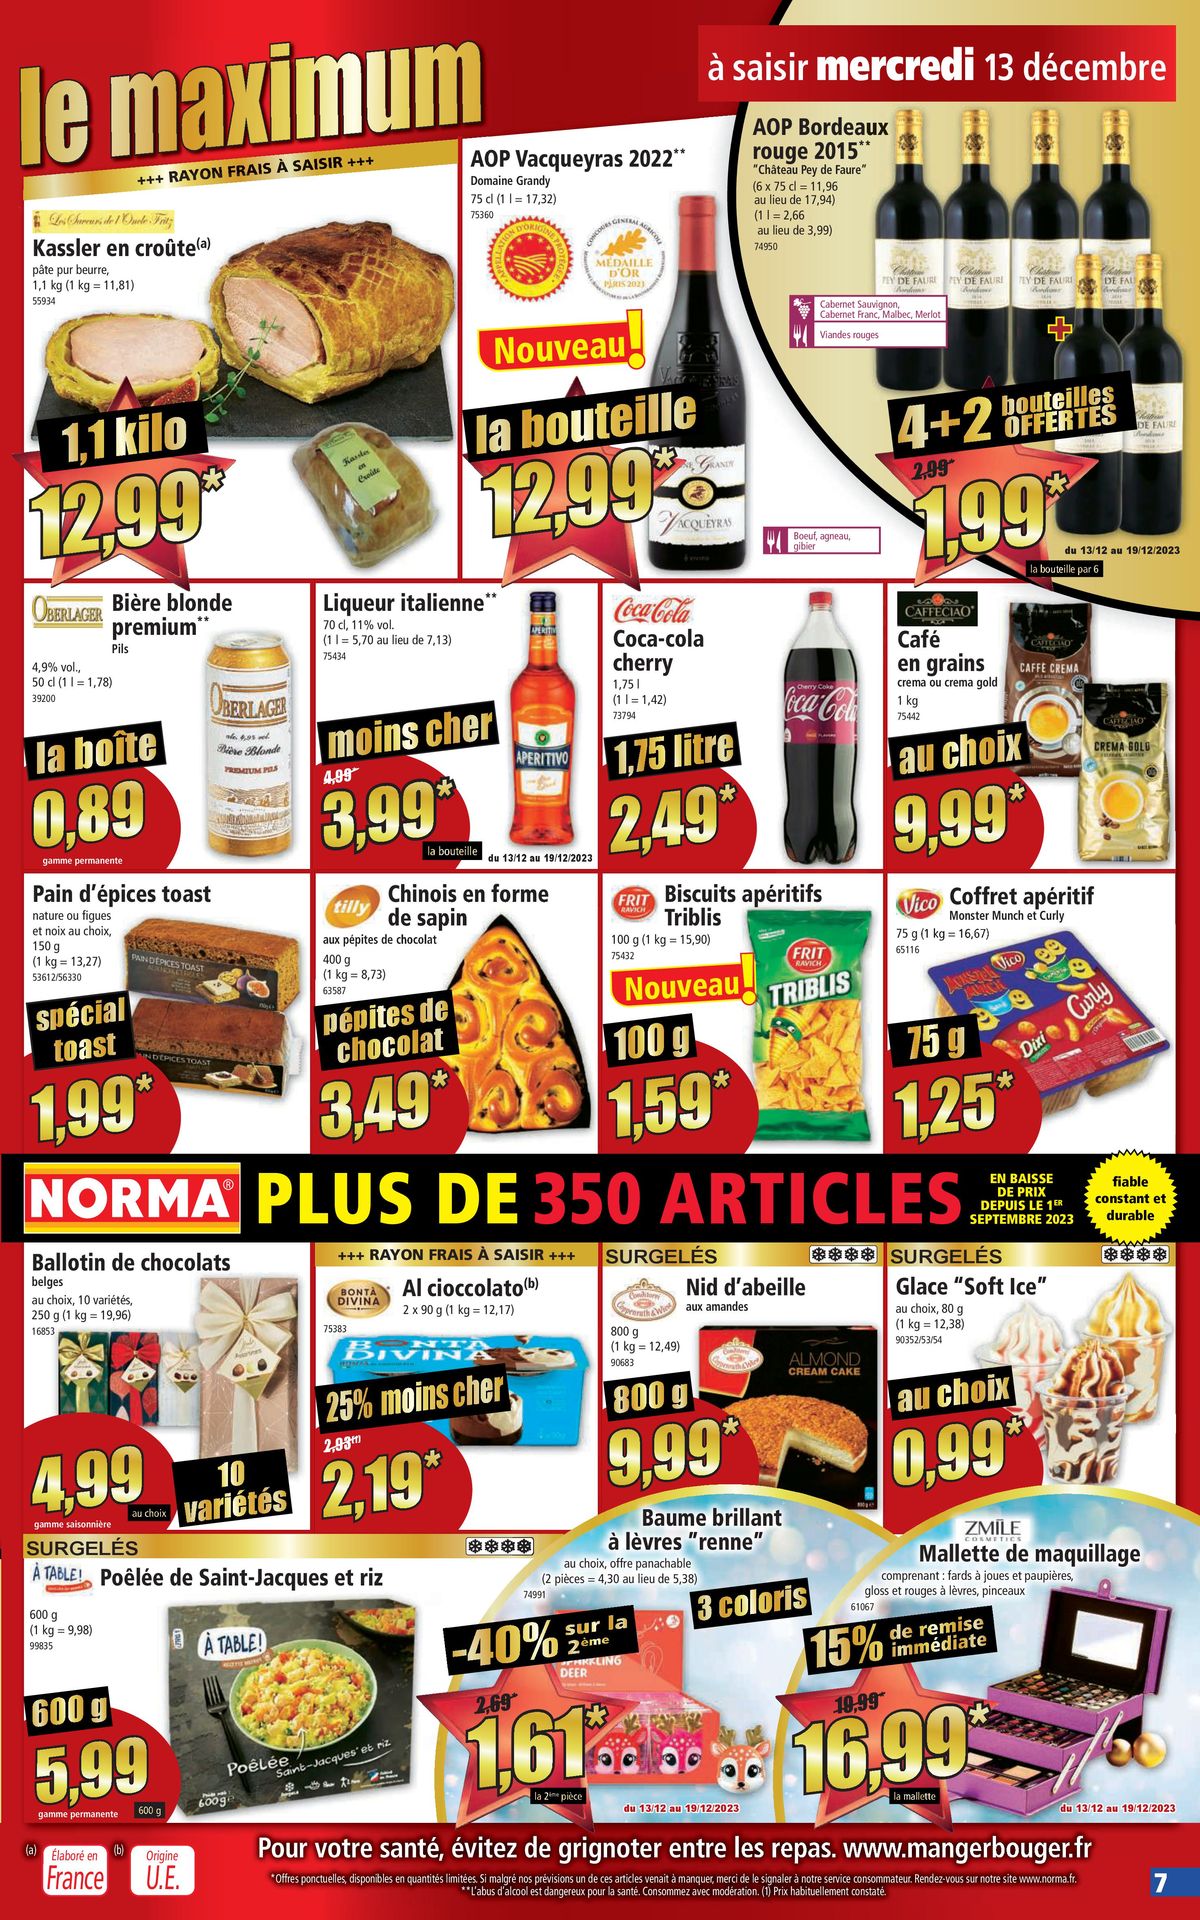 Catalogue Prix anti-inflation, page 00007